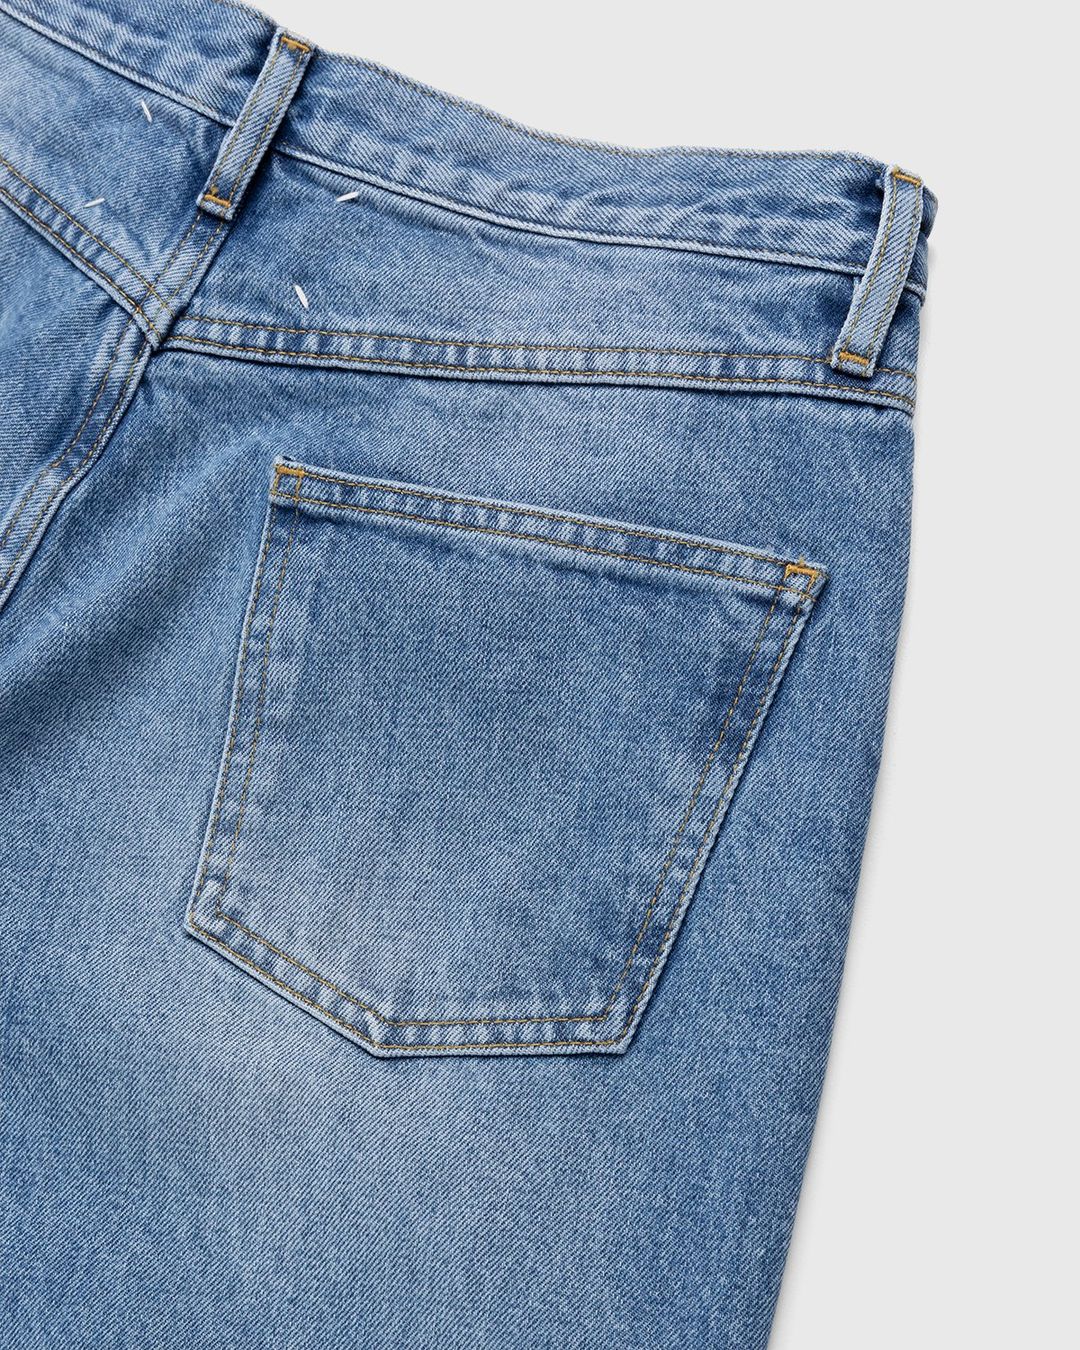 Maison Margiela – Five-Pocket Jeans Blue | Highsnobiety Shop